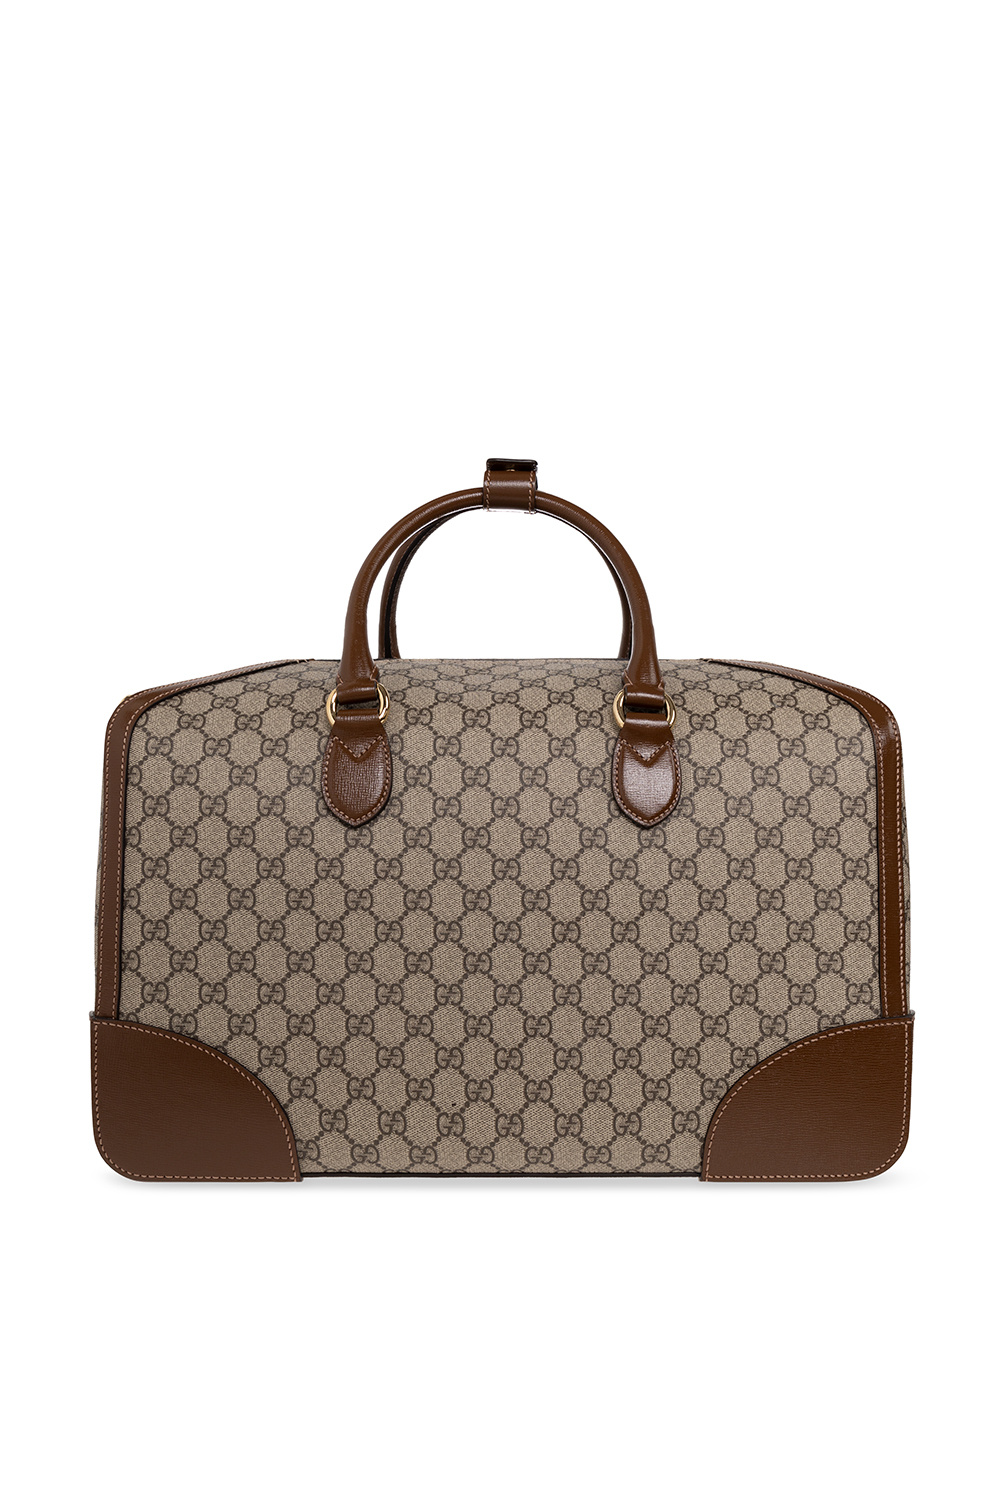 Supreme x Louis Vuitton in 2023  Leather duffle bag men, Designer